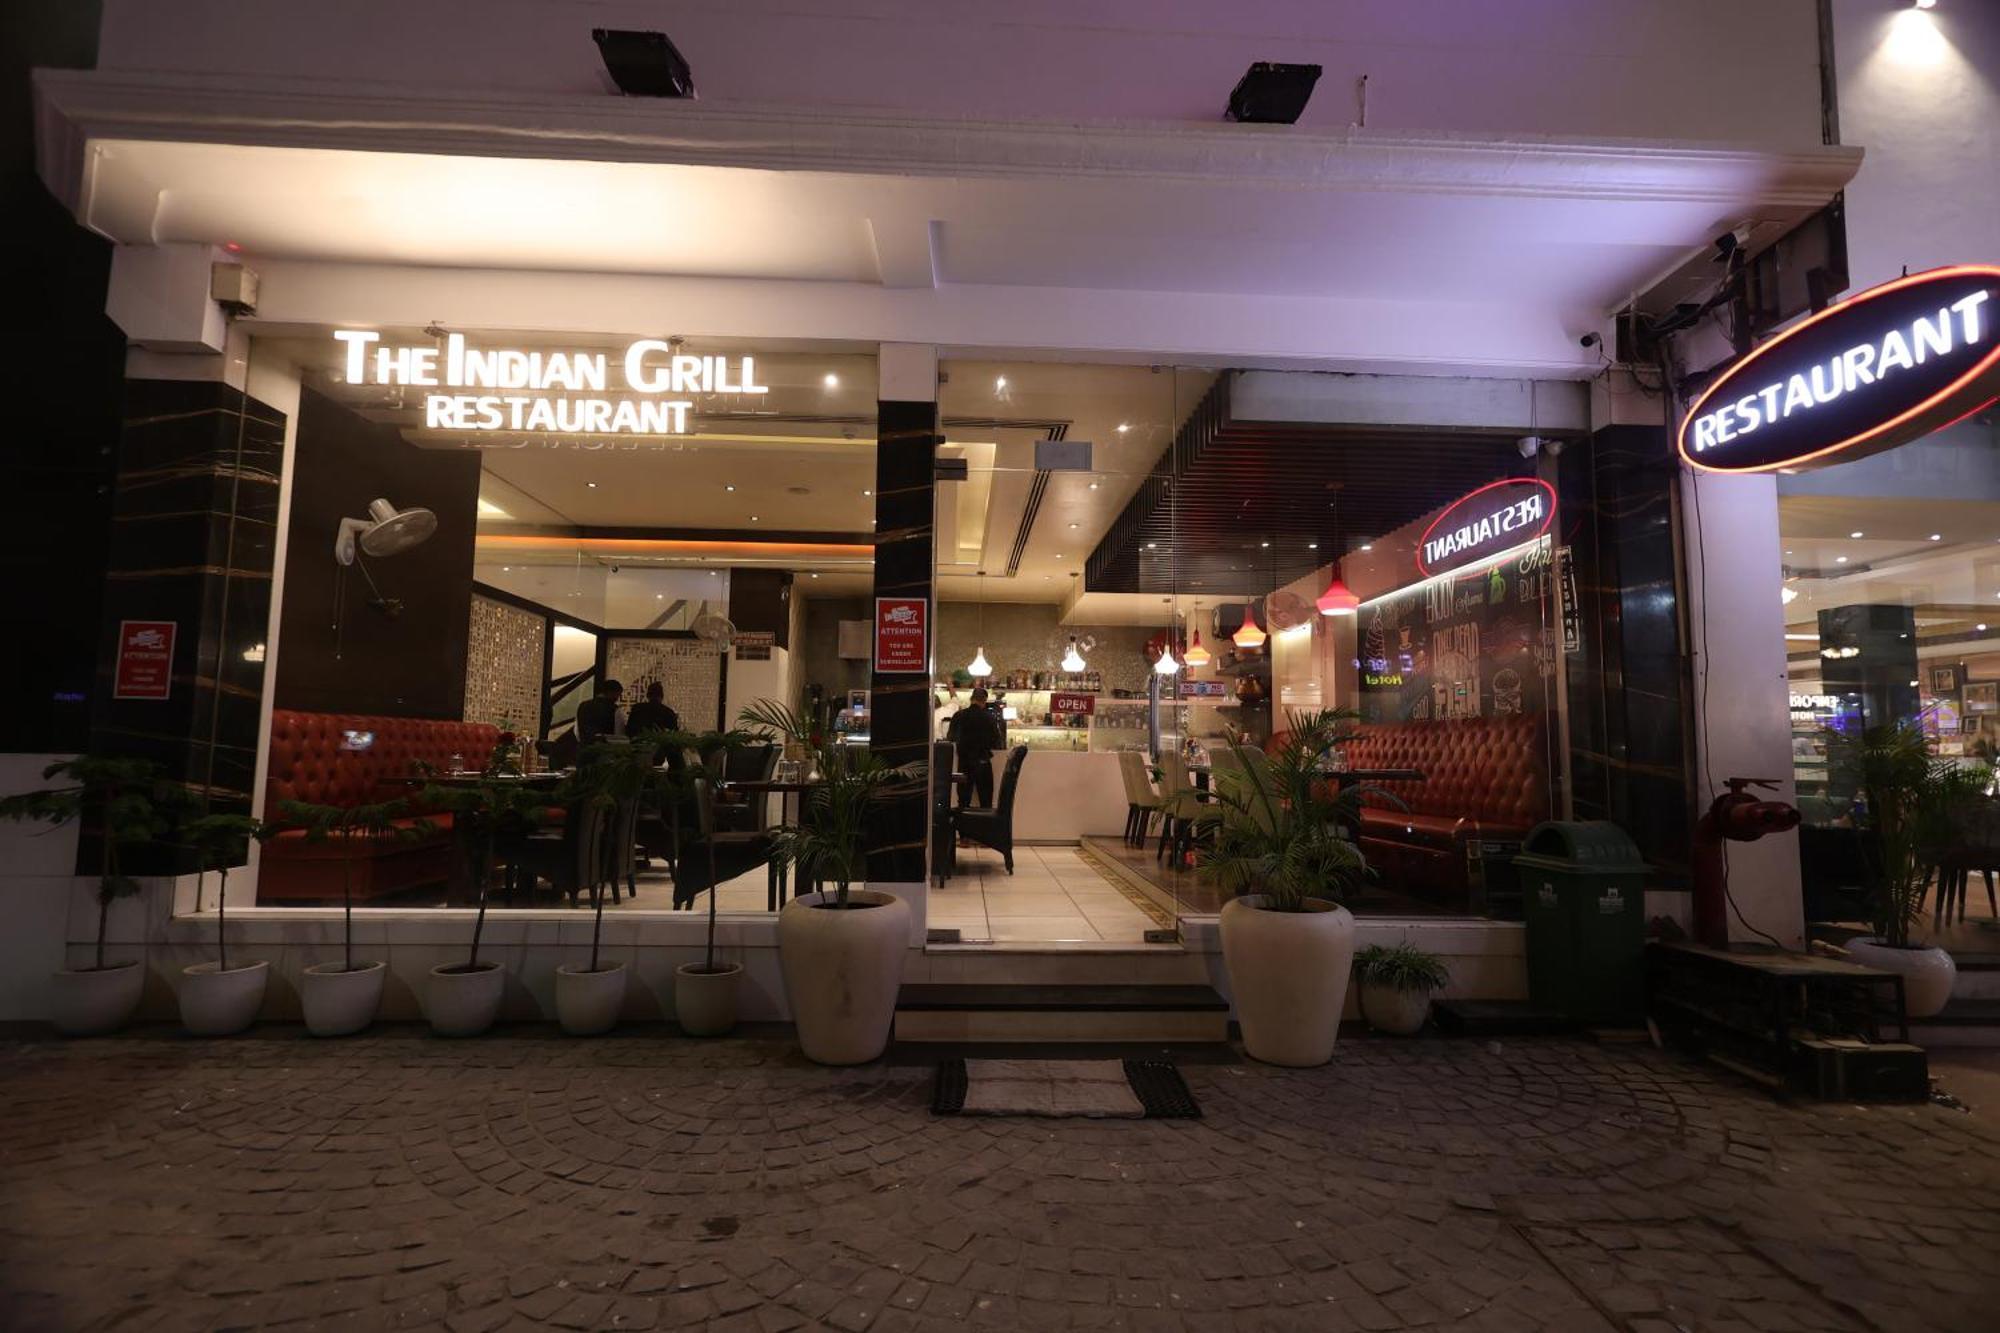 Hotel Godwin Deluxe -Near New Delhi Railway Station - Paharganj Exterior foto